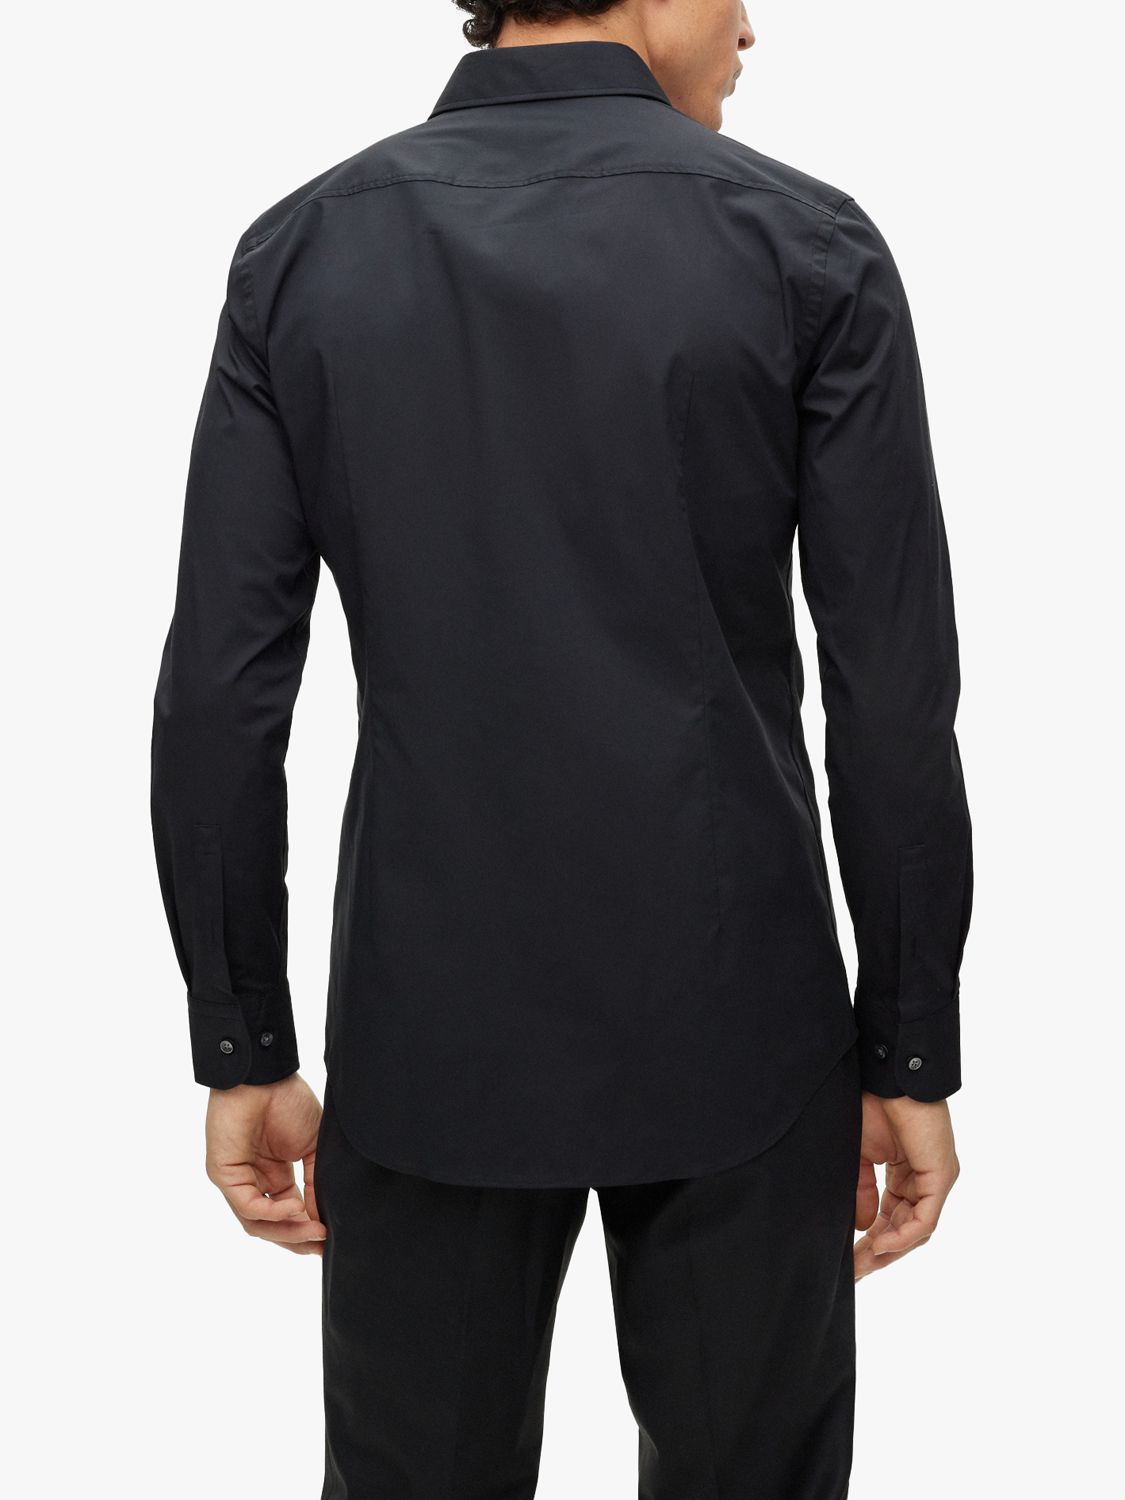 BOSS Hank Kent Slim Fit Shirt, Black at John Lewis & Partners